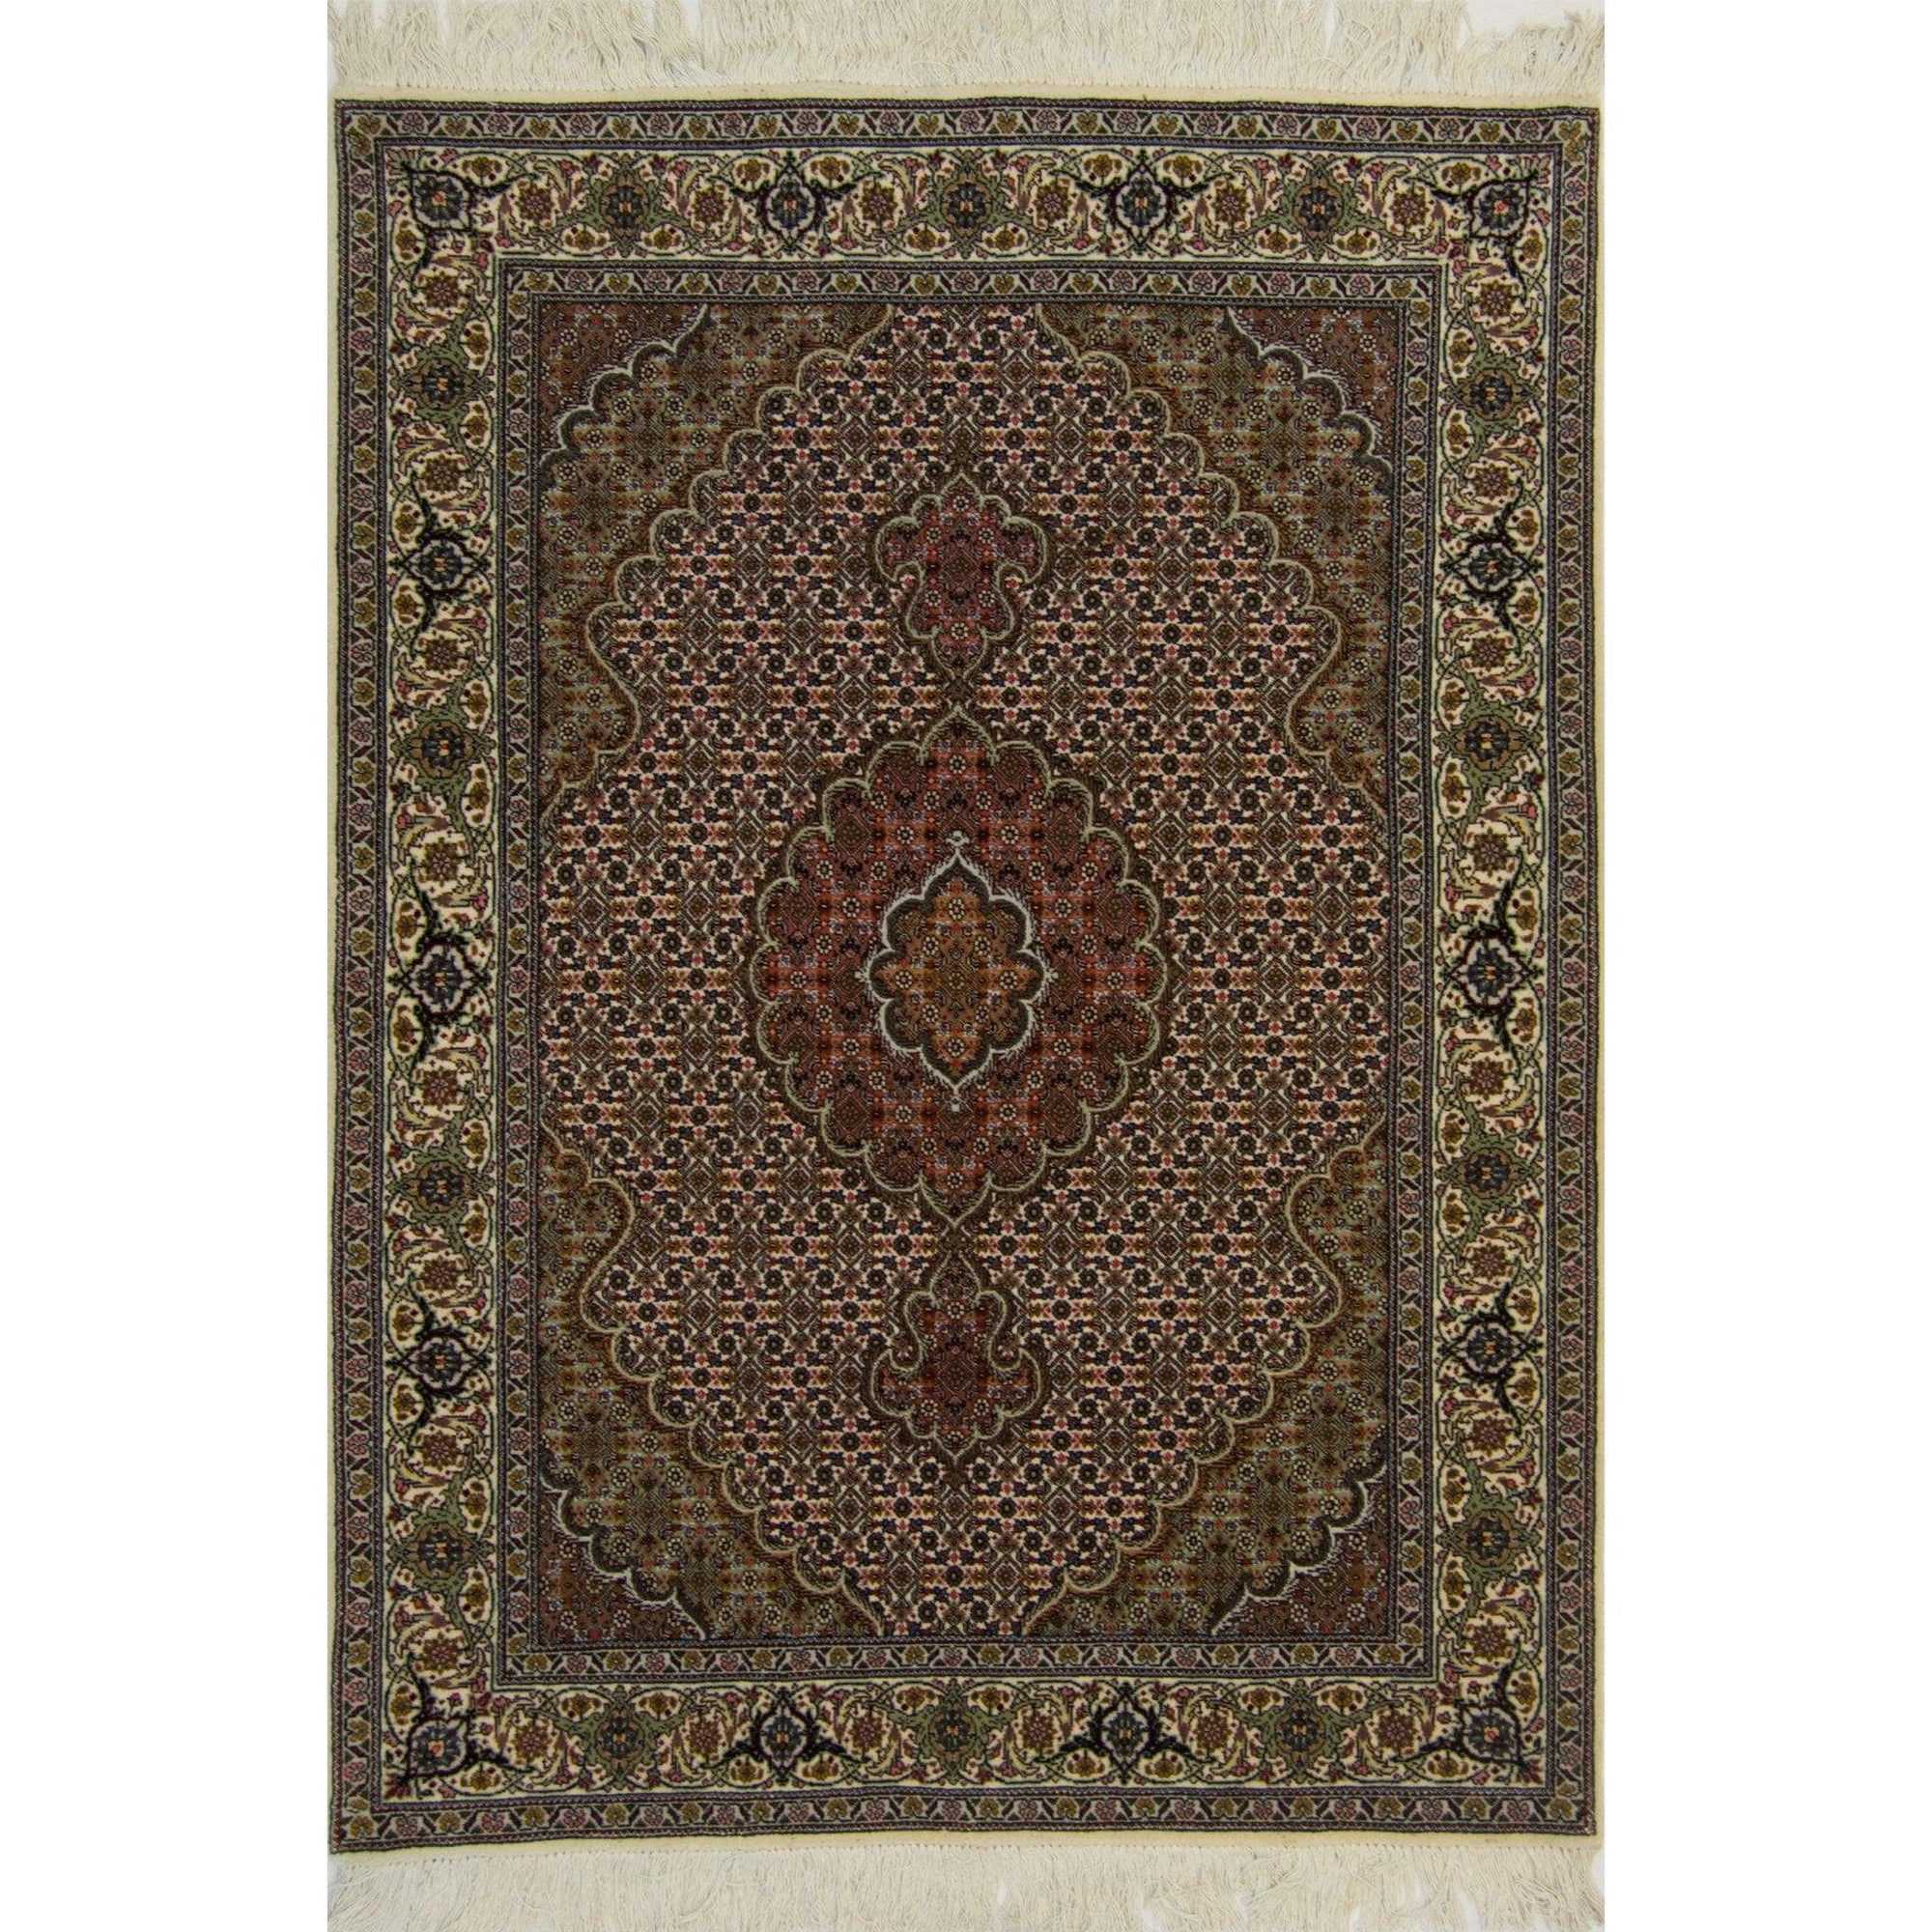 Fine Hand-knotted Persian Wool and Silk Tabriz - Mahi Design Rug 109cm x 148cm